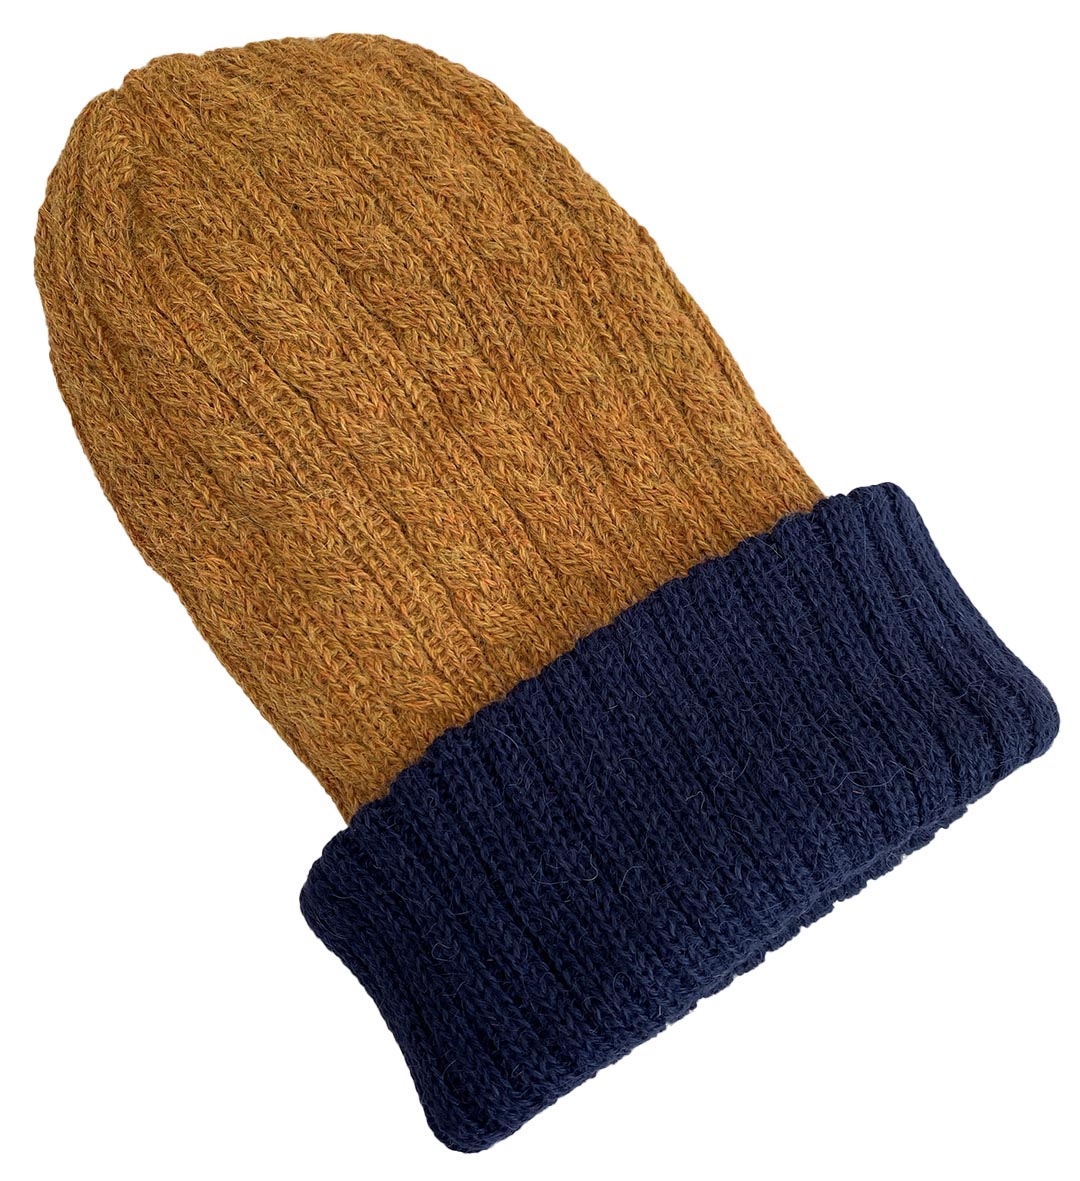 Reversible Hand Knit Alpaca Beanie - Navy/Mustard -1